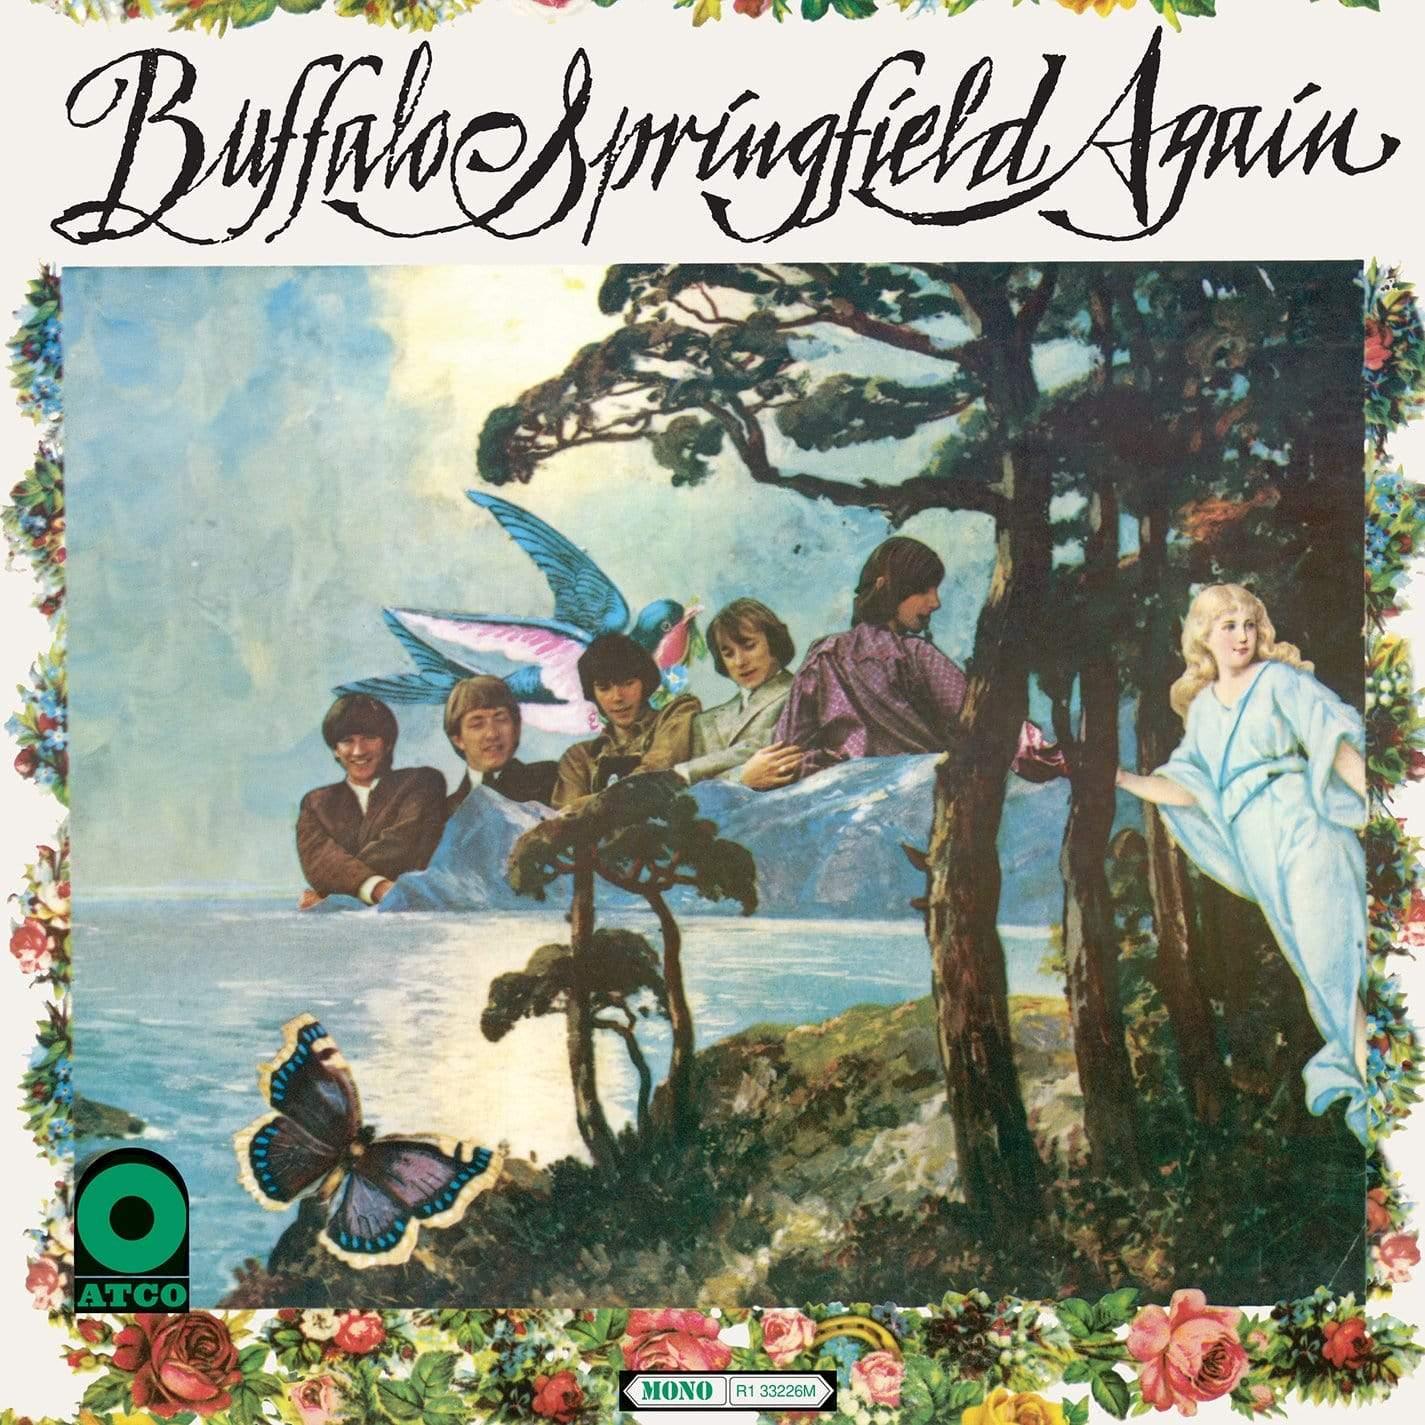 Buffalo Springfield - Buffalo Springfield Again (Syeor Exclusive 2019) (Vinyl) - Joco Records